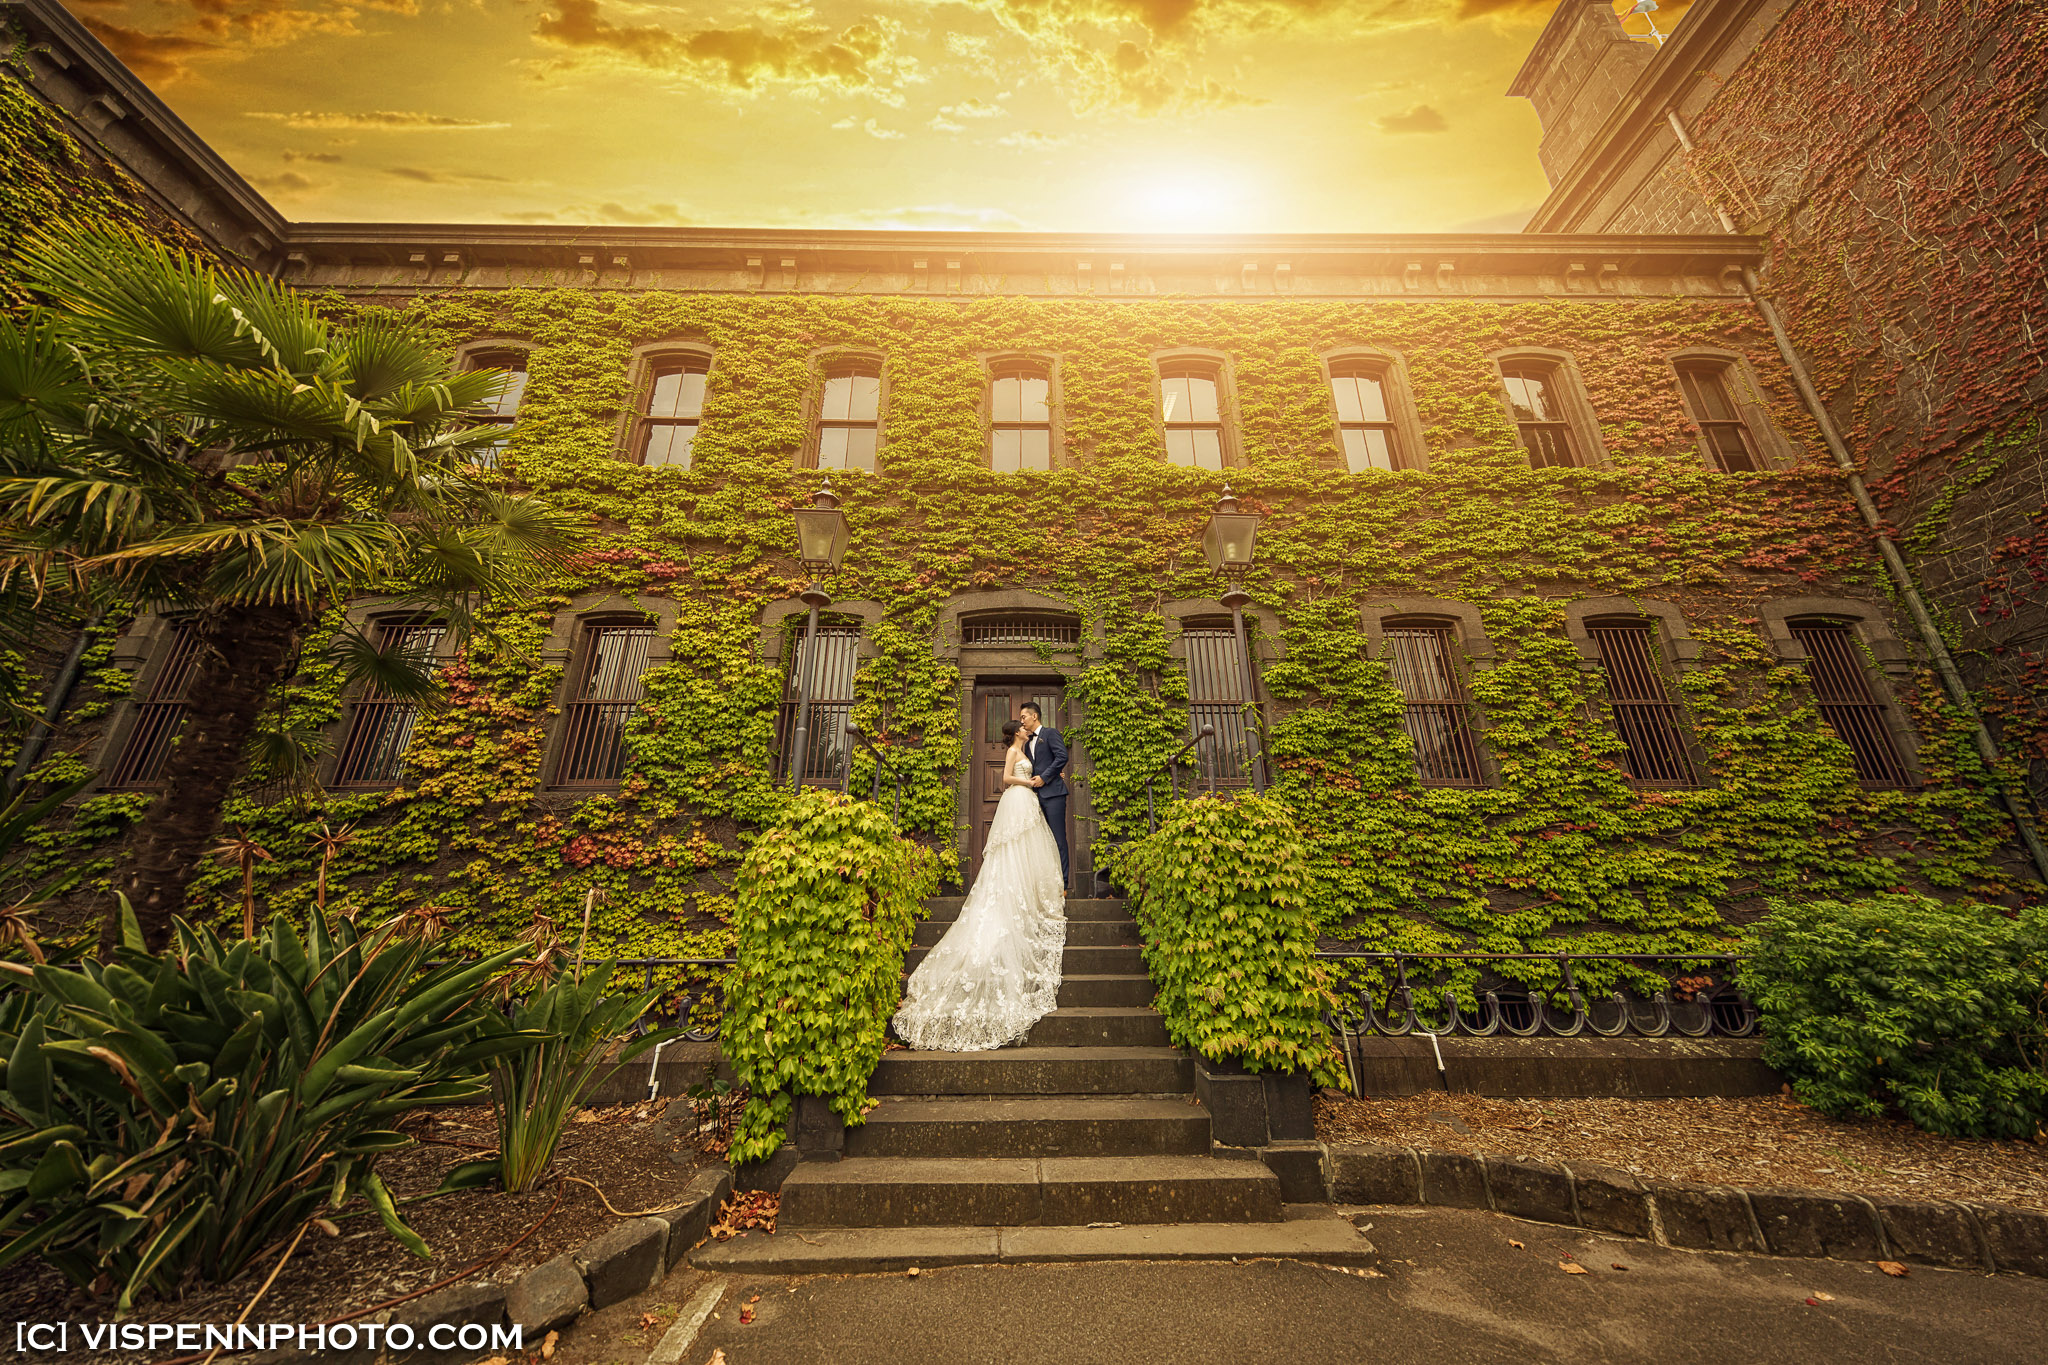 PRE WEDDING Photography Melbourne VISPENN 墨尔本 婚纱照 结婚照 婚纱摄影 VISPENN ZhouWenPreWedding 8727 1